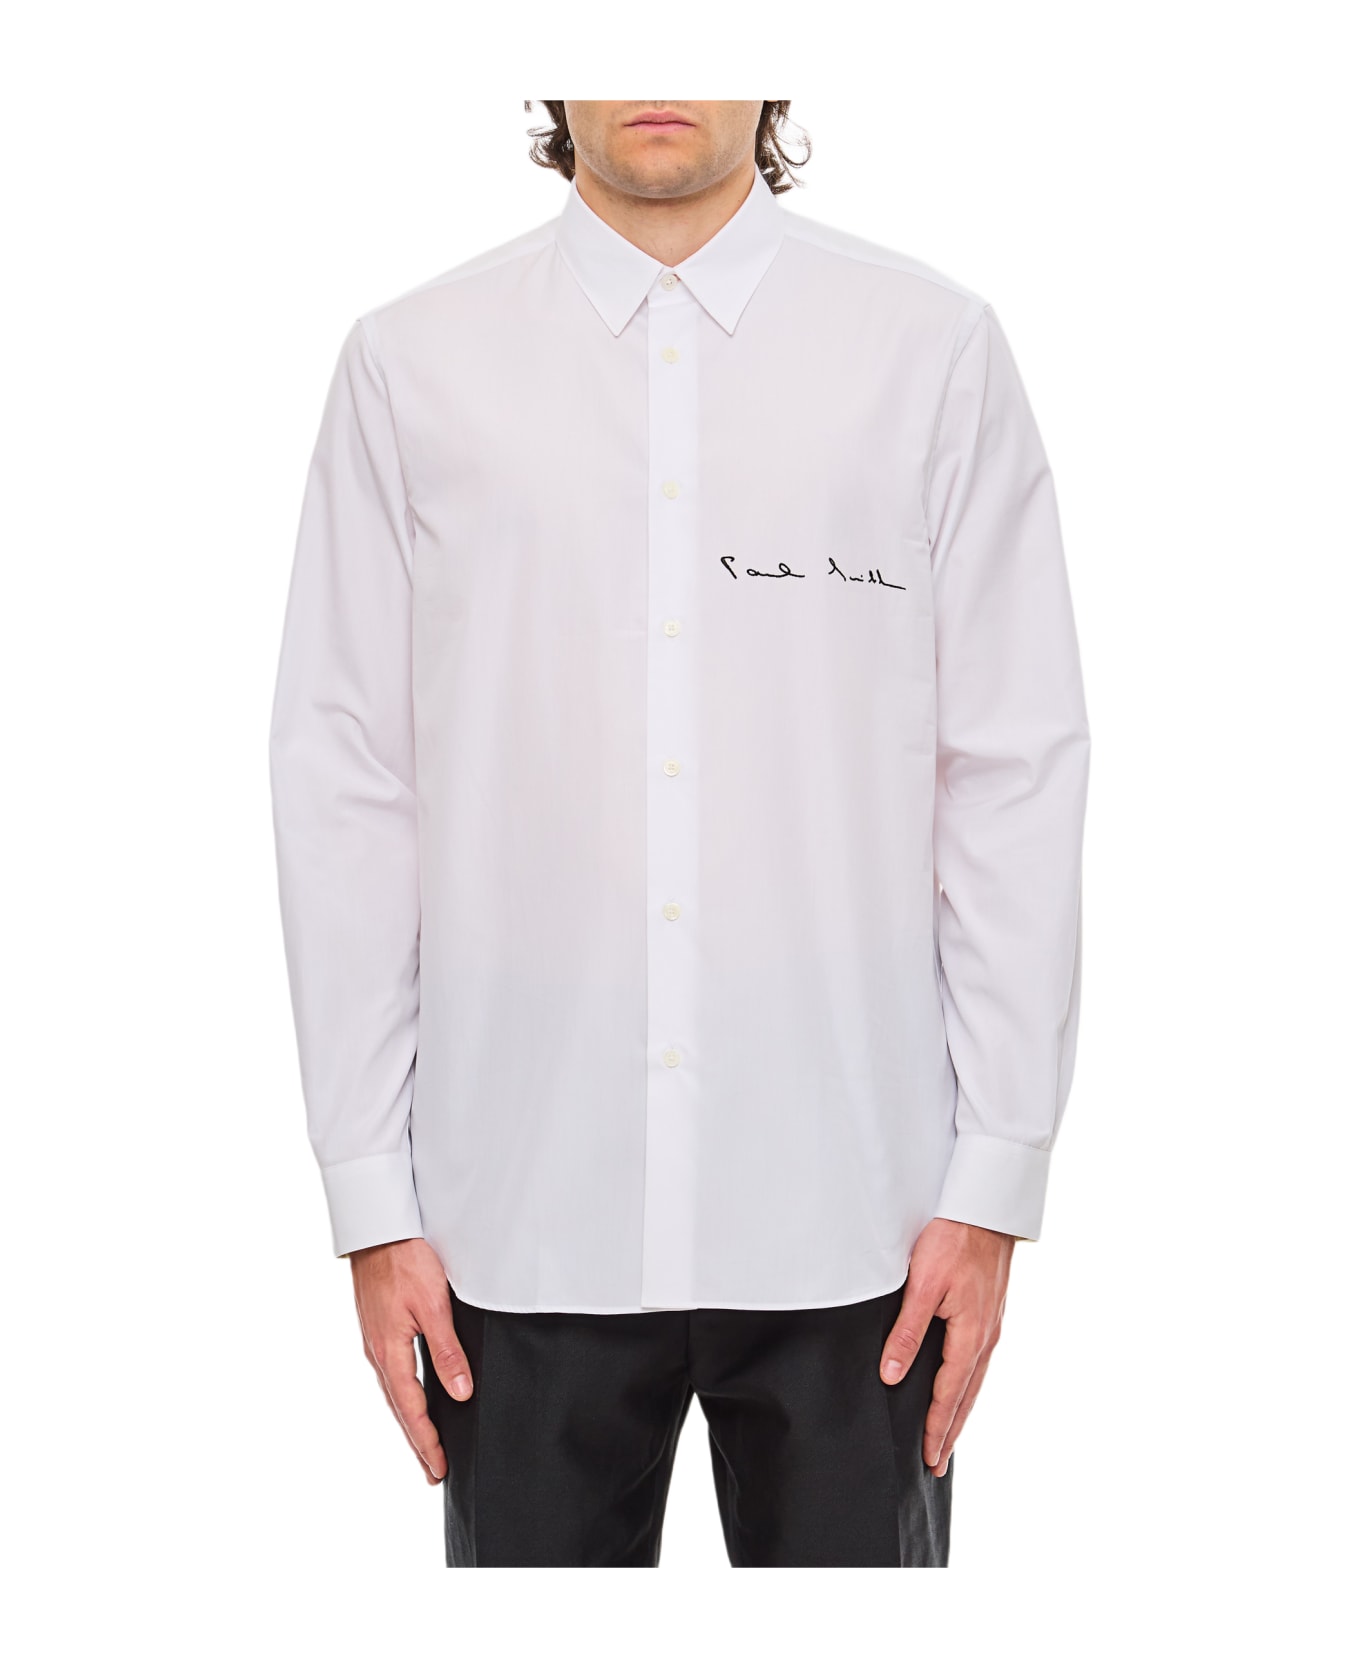 Paul Smith S/c Regular Fit Shirt - White